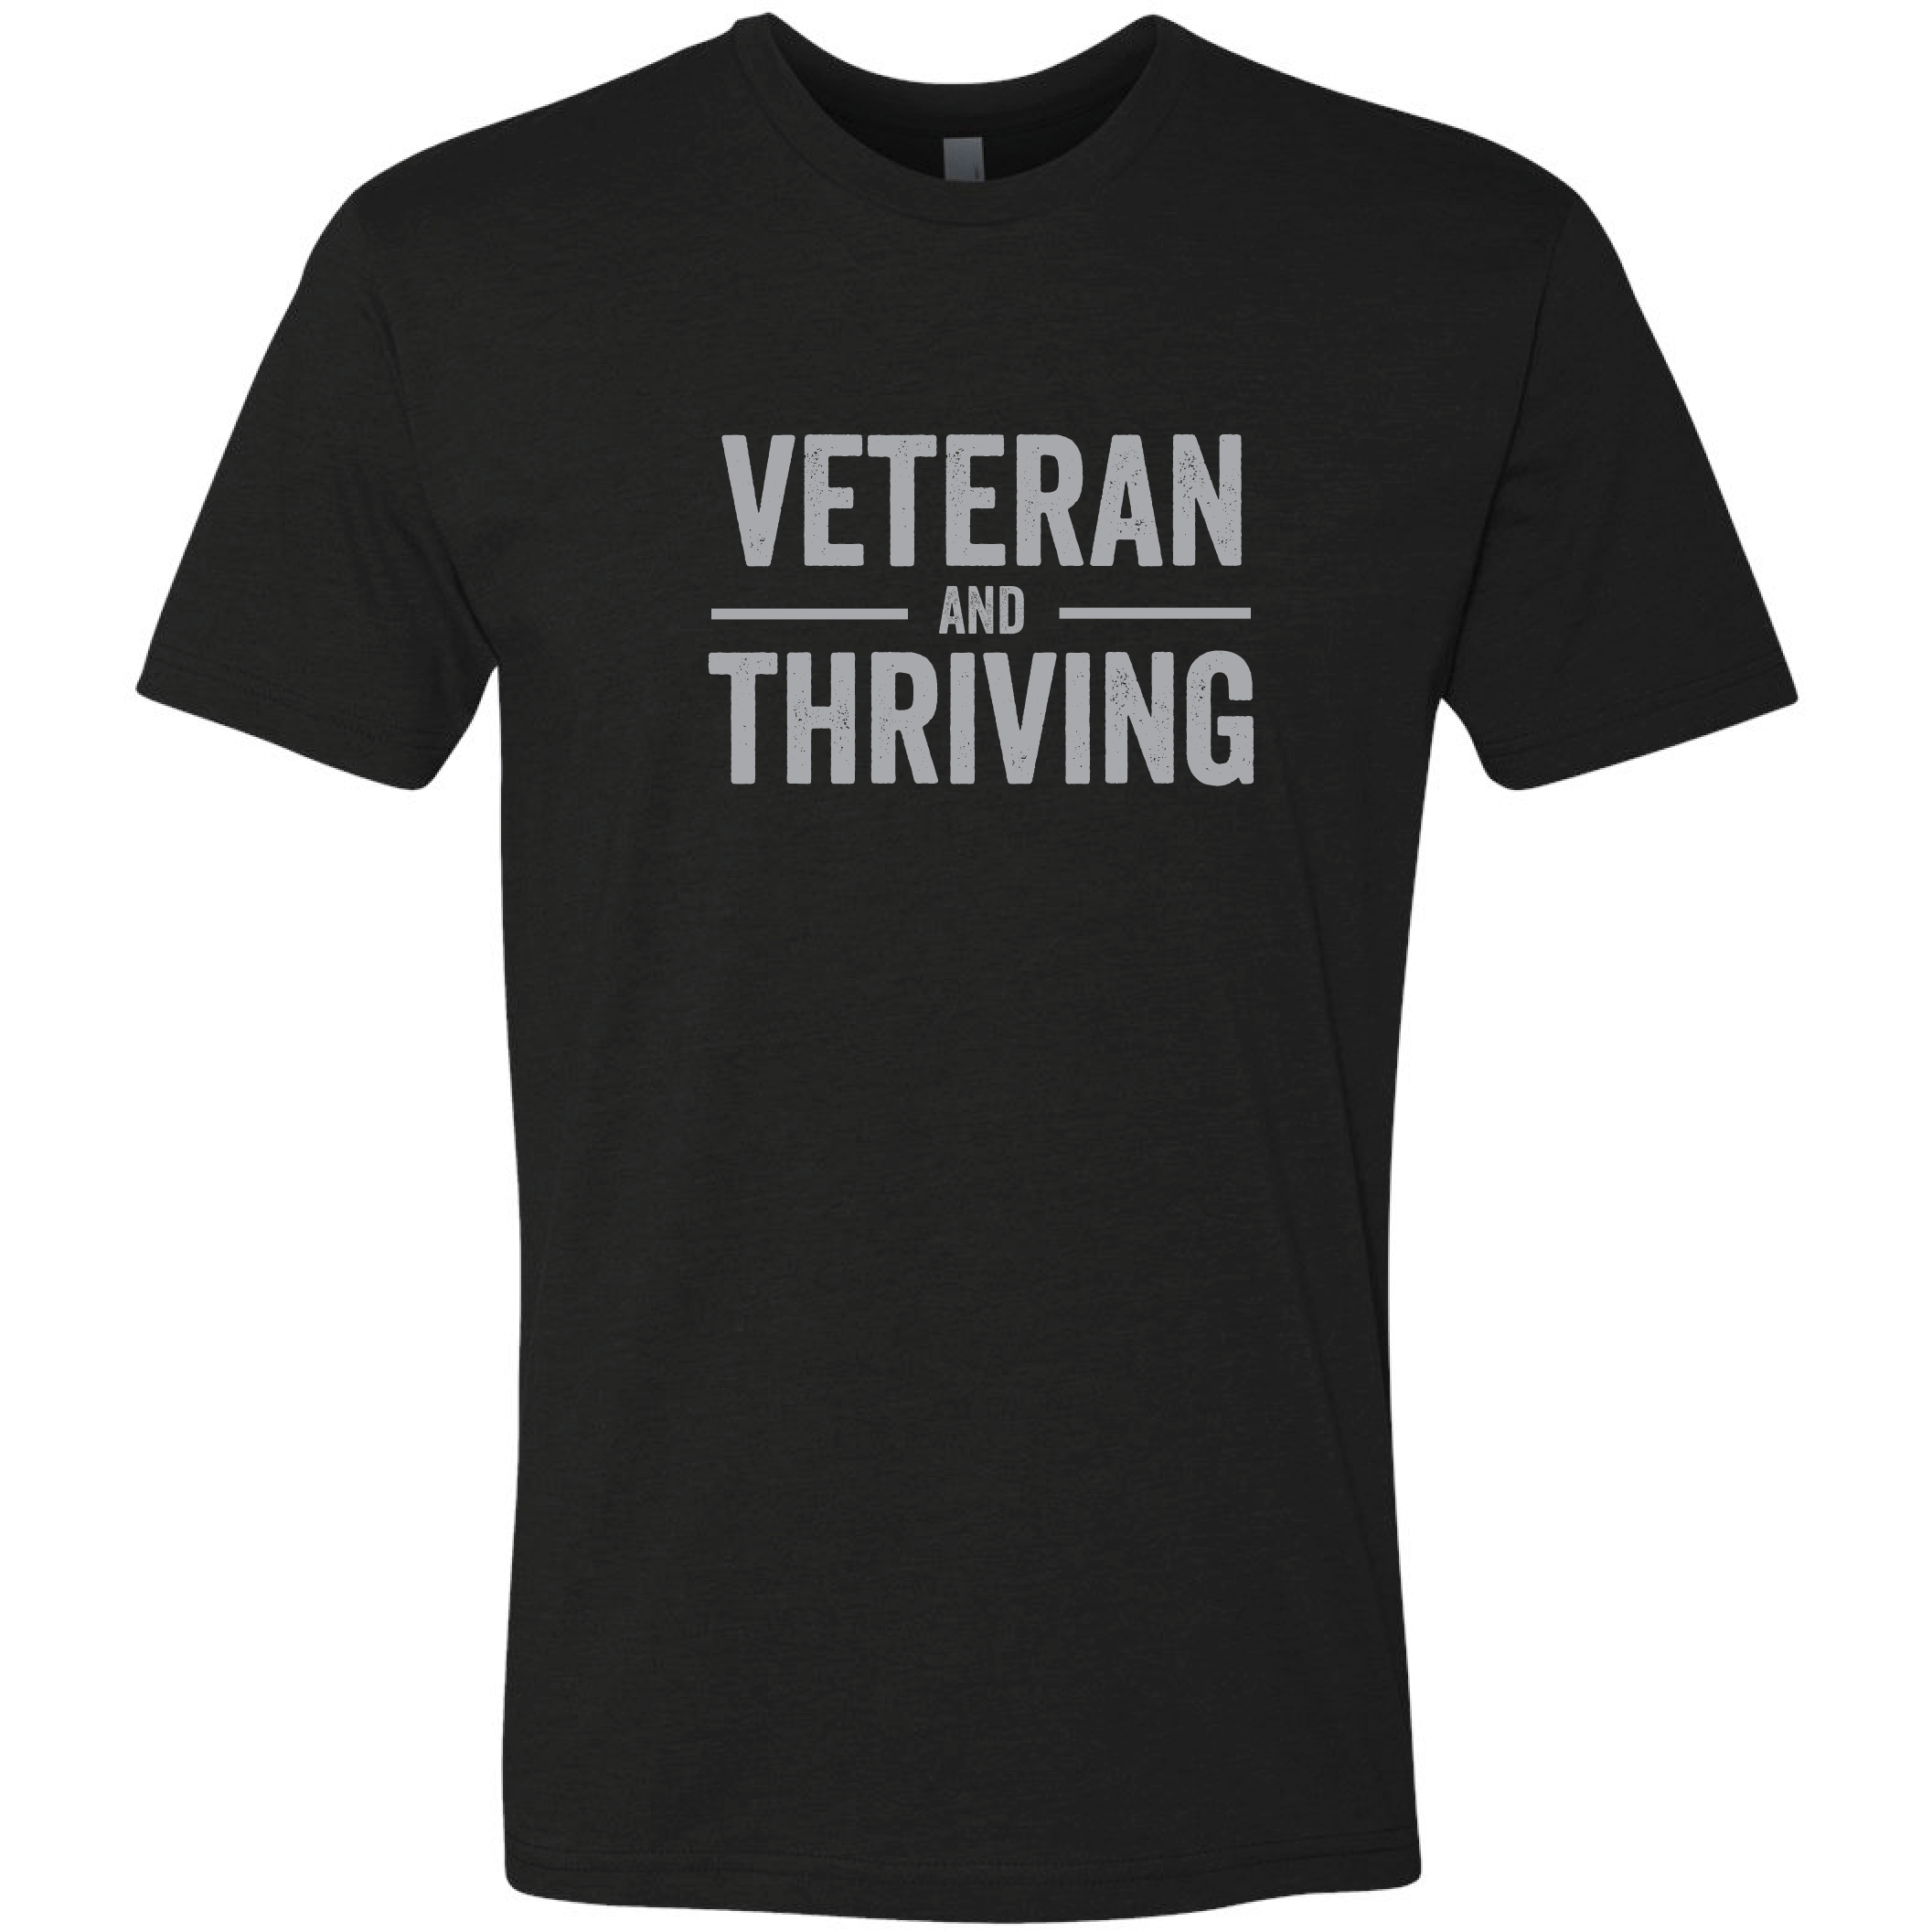 We Defy The Norm Men's Shirt S / Black Veteran + Thriving T-Shirt